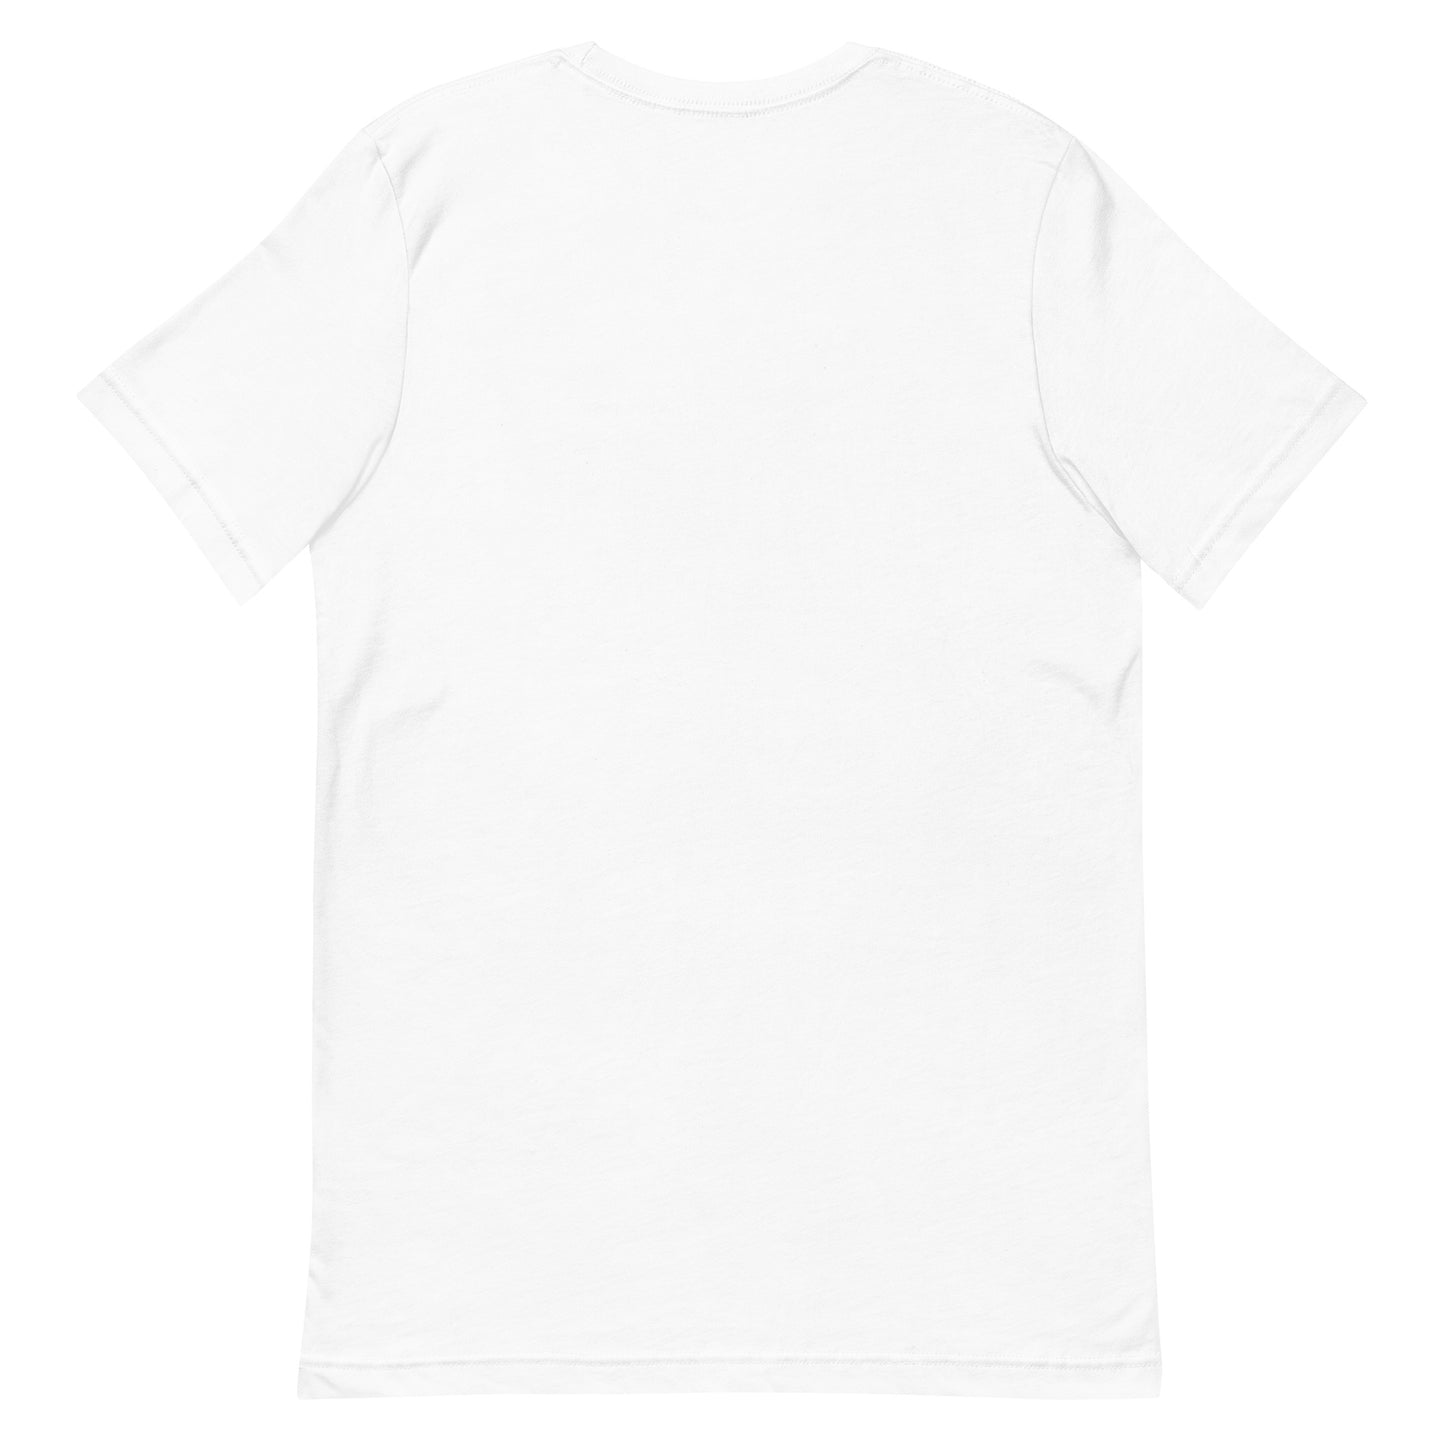 CRAZY DAN (THE MNUSICAL) - Unisex t-shirt